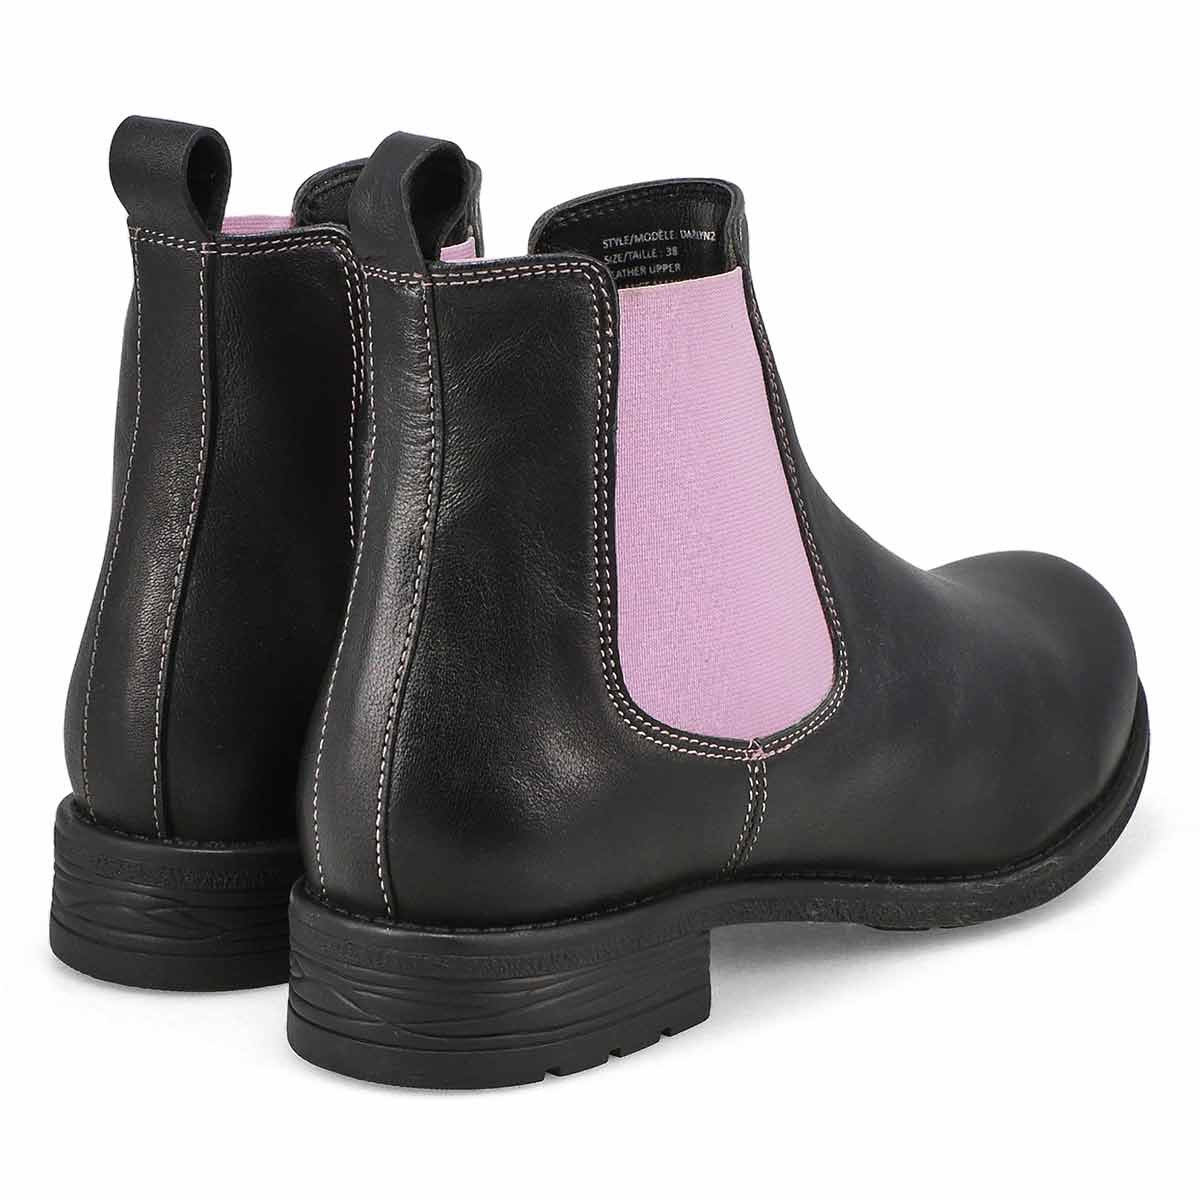 Women's Darilyn 2 Leather Chelsea Boot - Black/Mauve